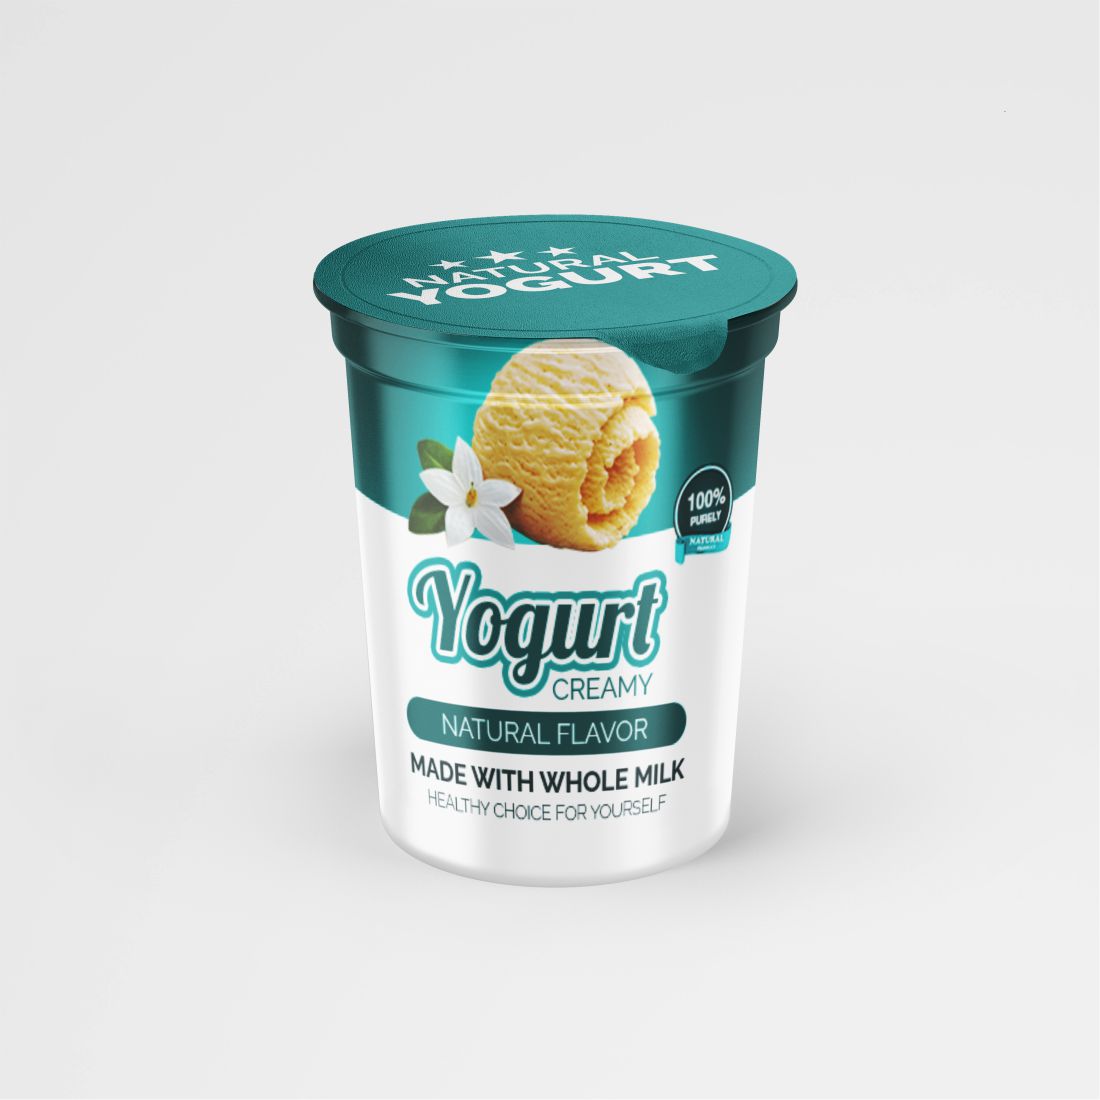 Yogurt Mockup cover image.